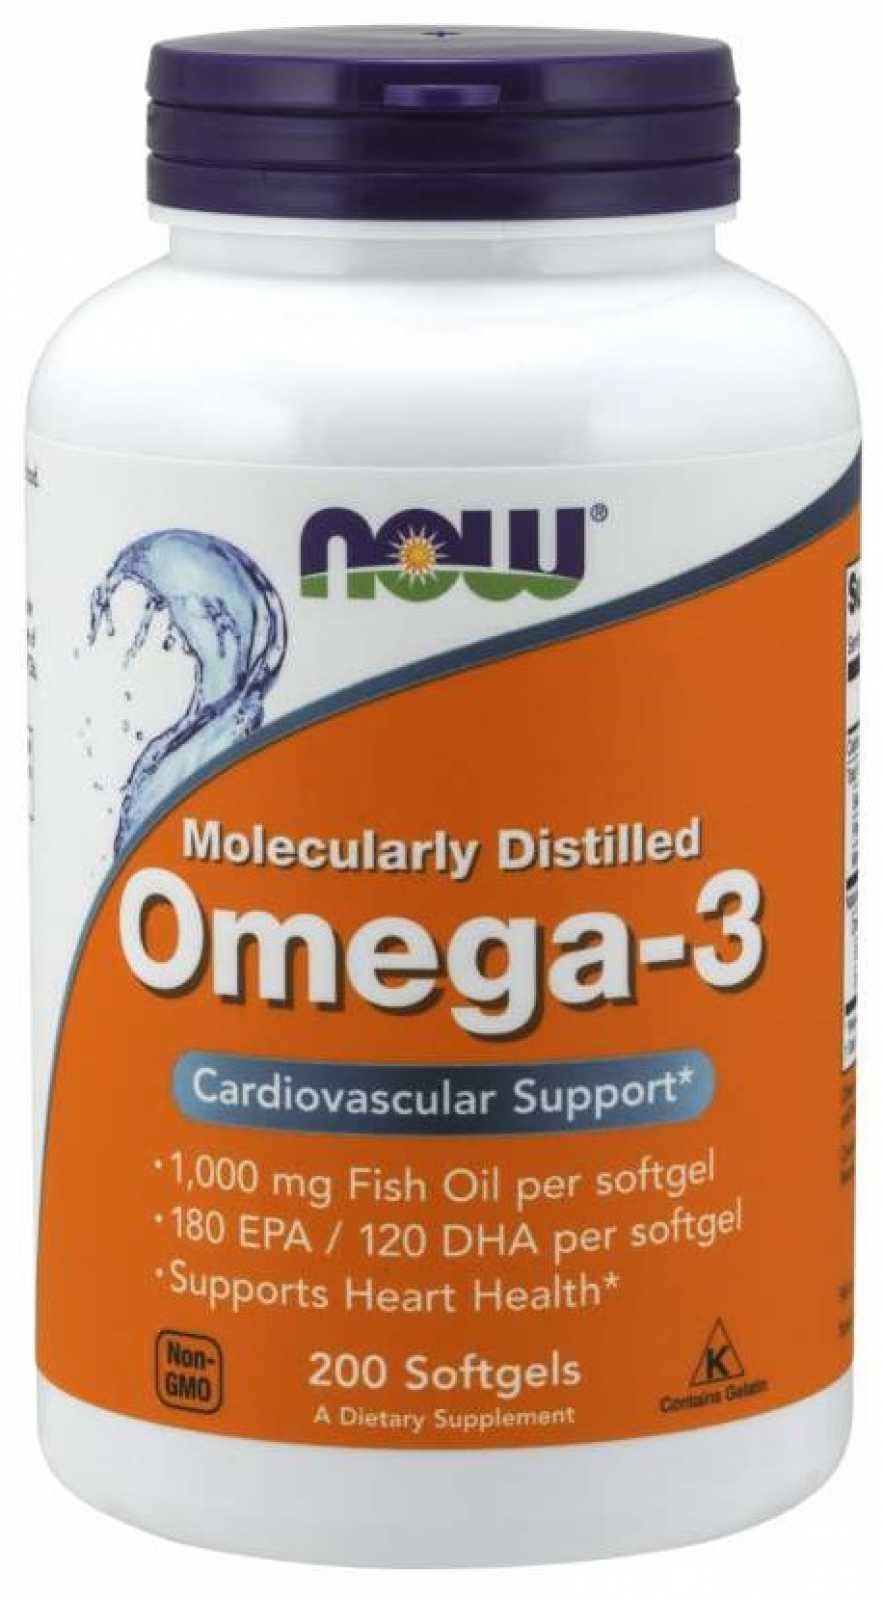 Omega 3 Cardiovascular Support - 200 Softgels